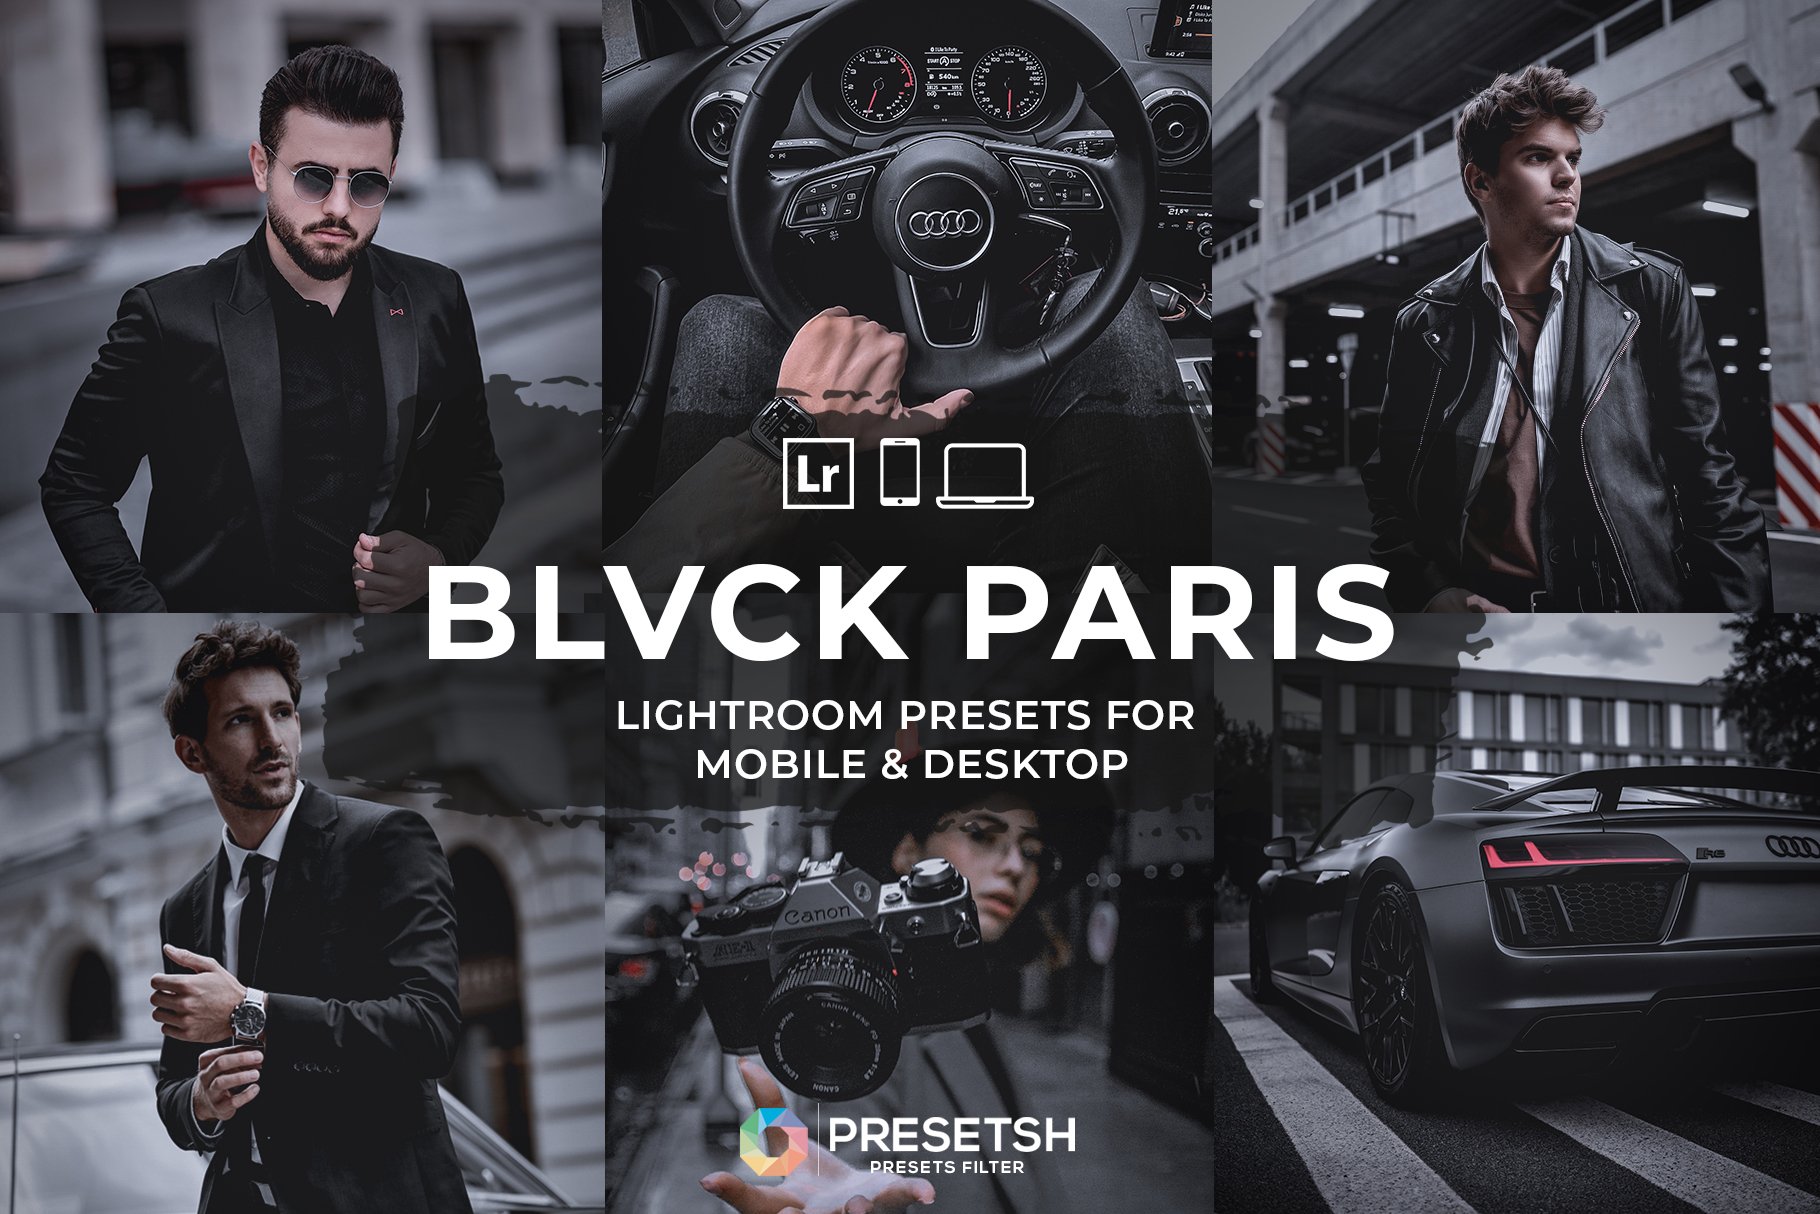 Black Paris Lightroom Presetscover image.